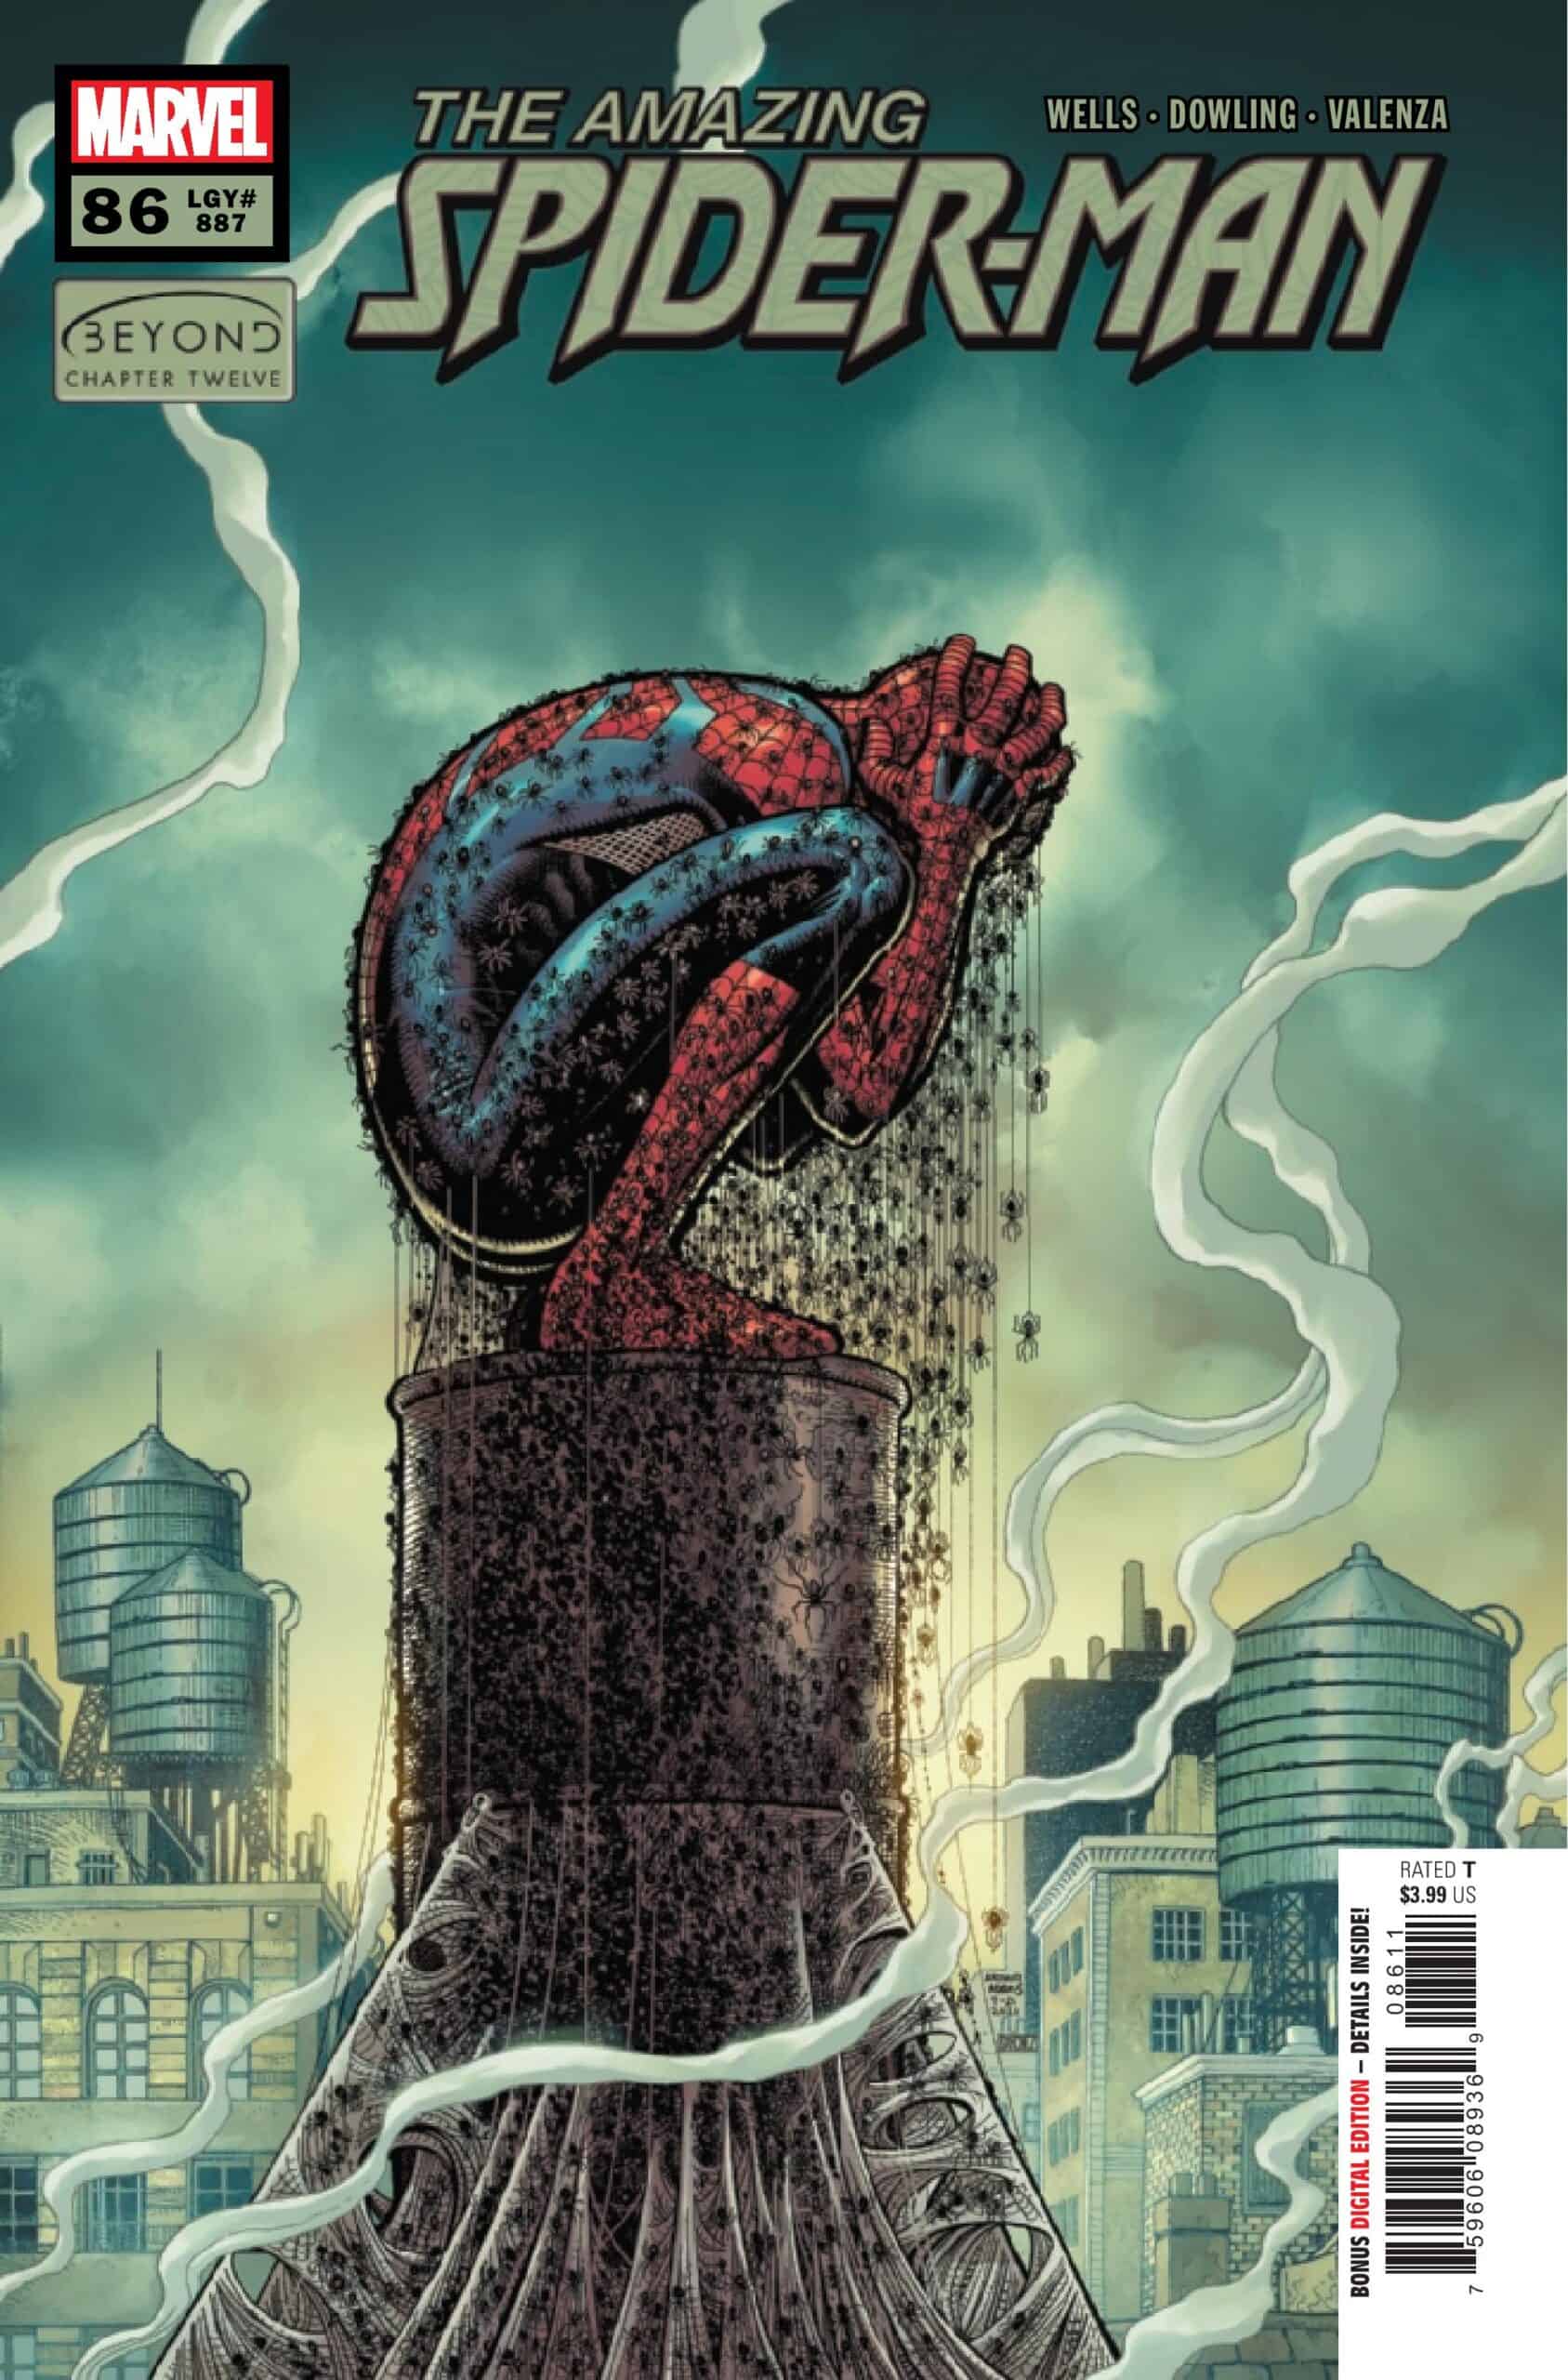 EXCLUSIVE SNEAK PEEK: Preview of MARVEL COMICS THE AMAZING SPIDER-MAN #86 -  Comic Watch